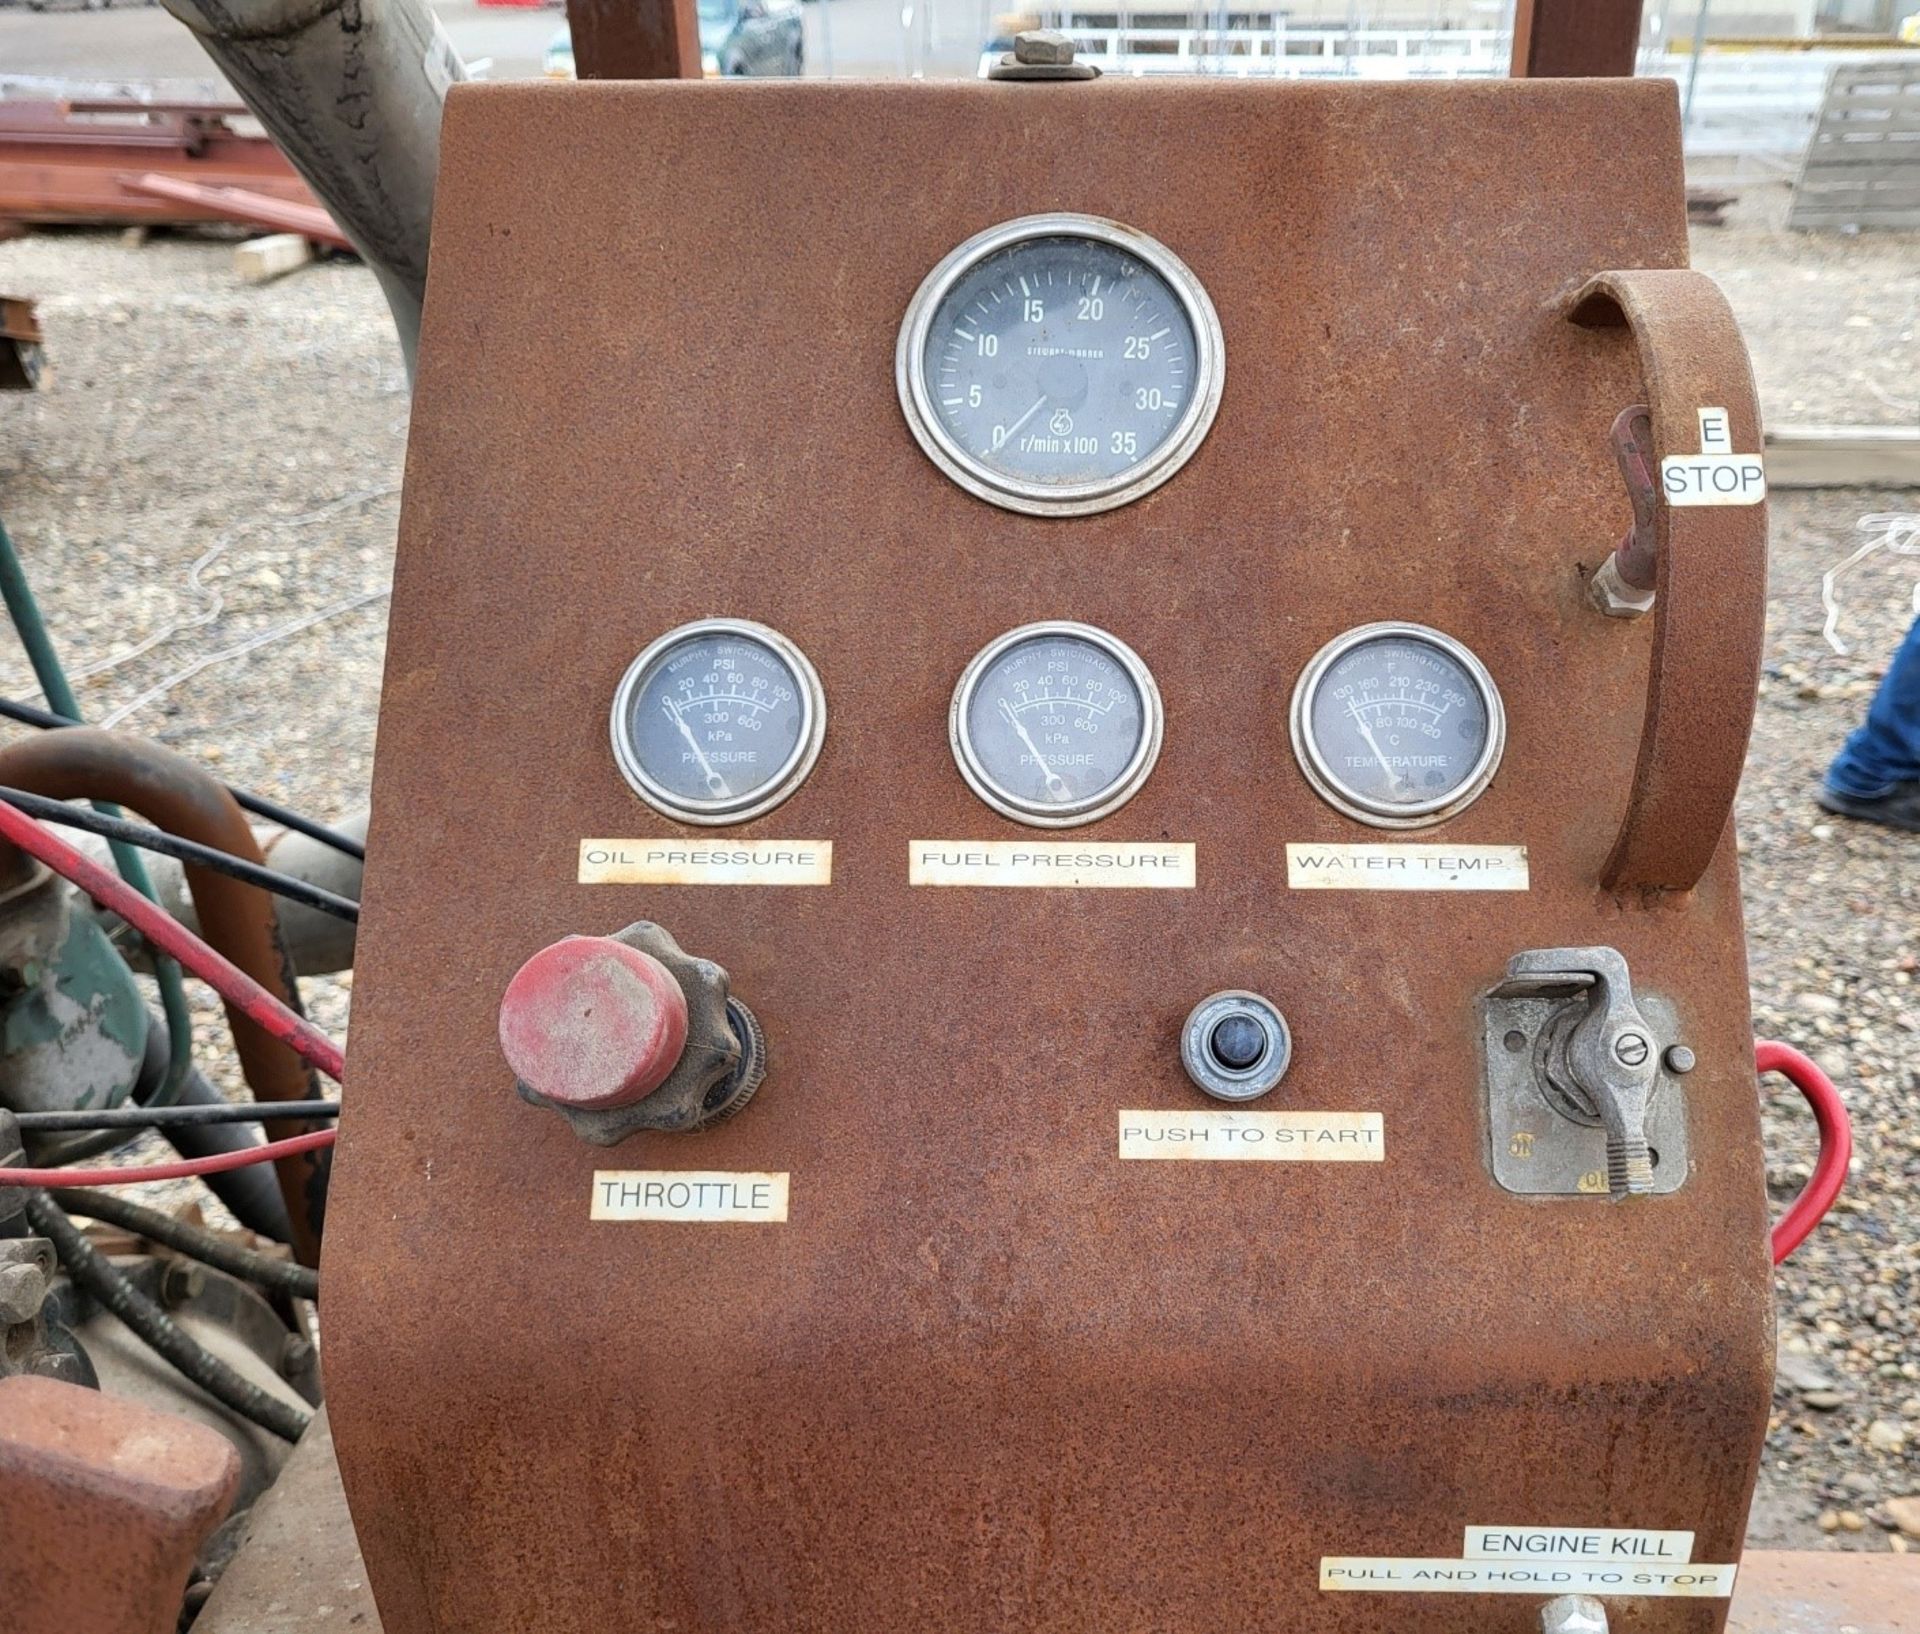 Hauhinco High Pressure Pump with Detroit Diesel Engine - Image 2 of 15